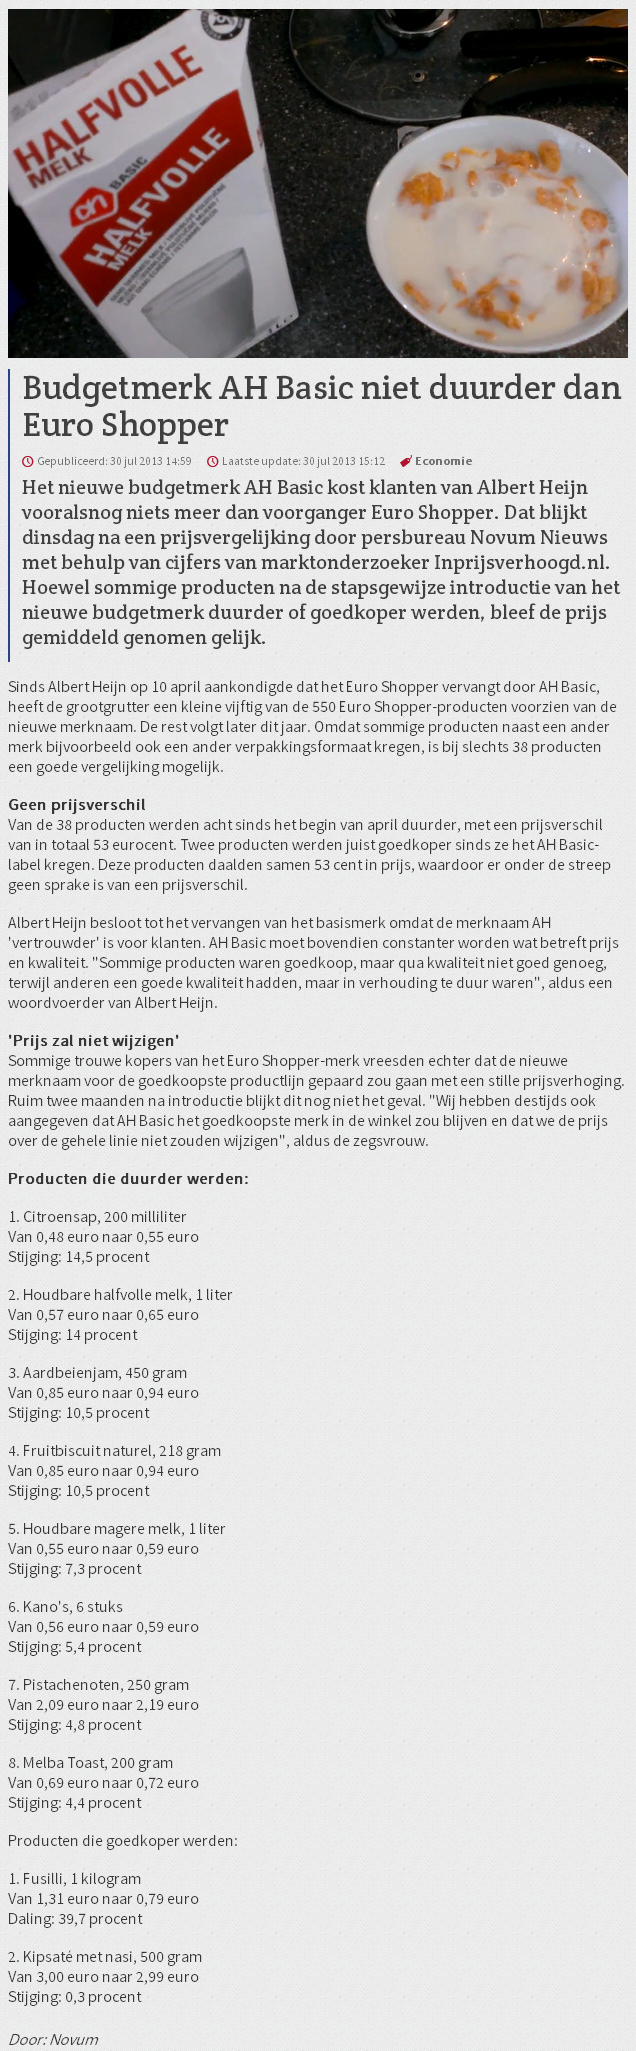 Nieuws.nl: Budgetmerk AH Basic niet duurder dan Euro Shopper